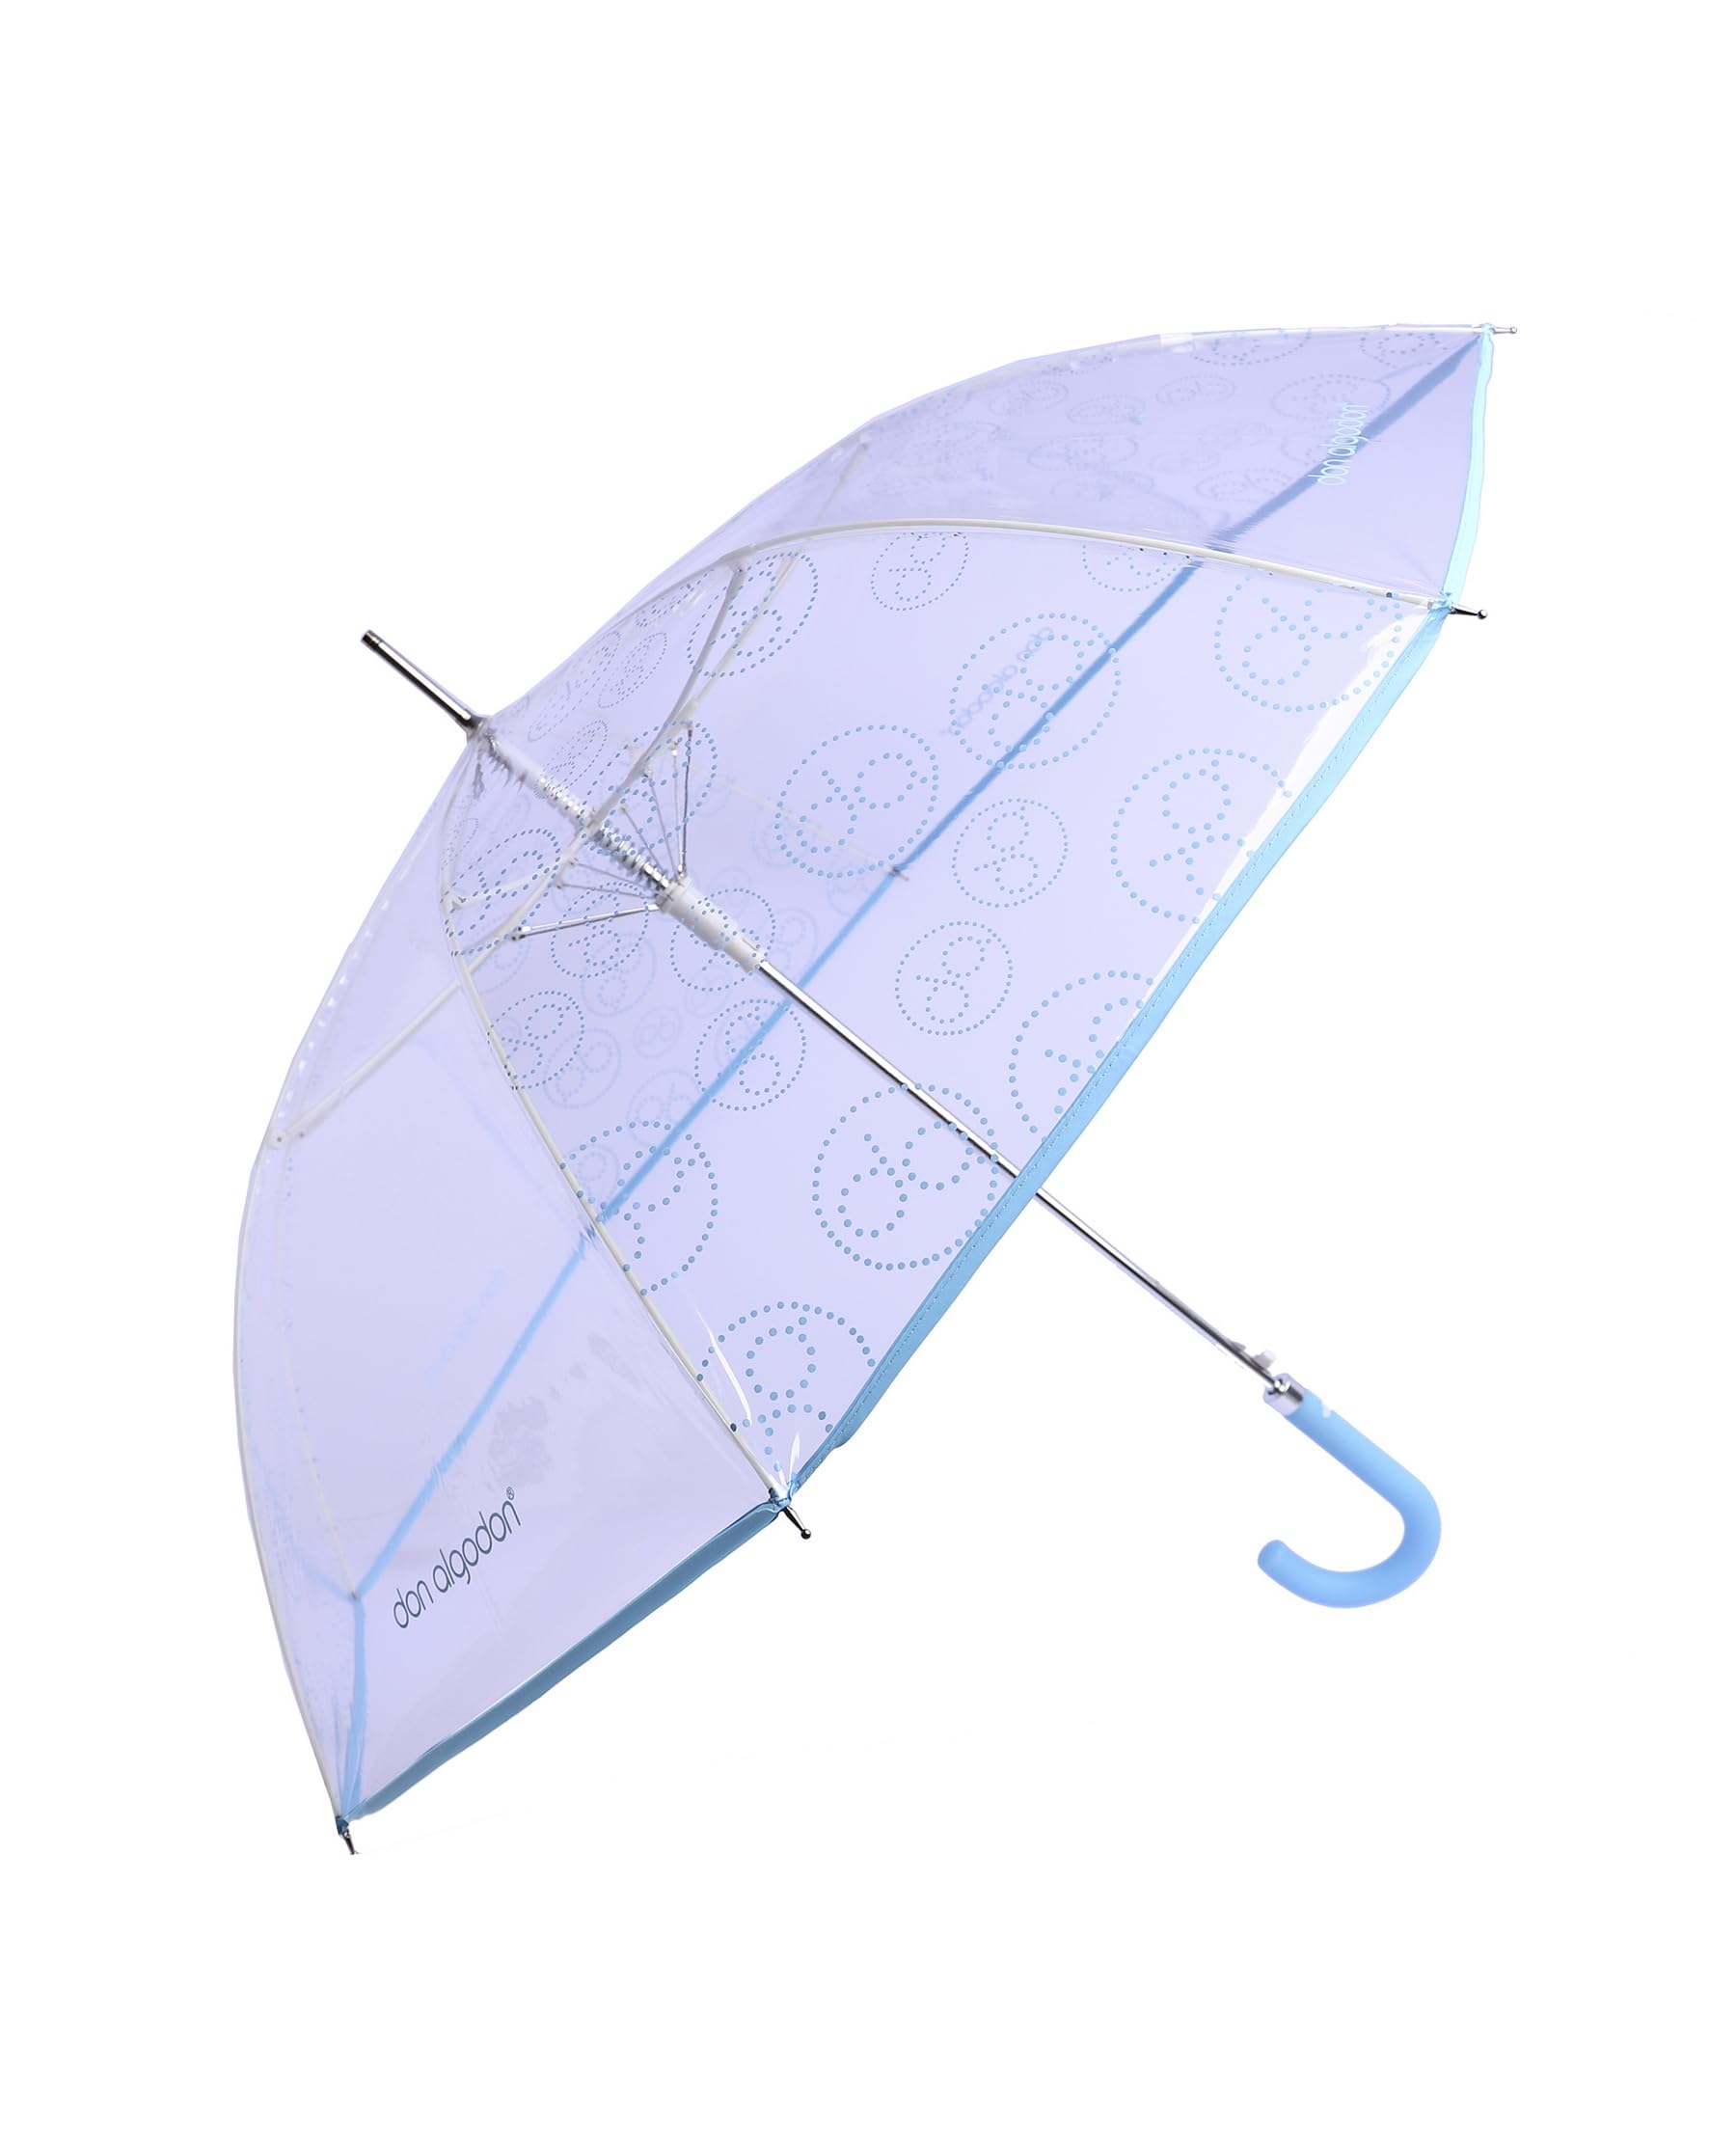 DON ALGODON - Regenschirm transparent - Durchsichtiger regenschirm durchsichtig - Regenschirm sturmfest - Regenschirm damen - Regenschirme für damen sturmfest